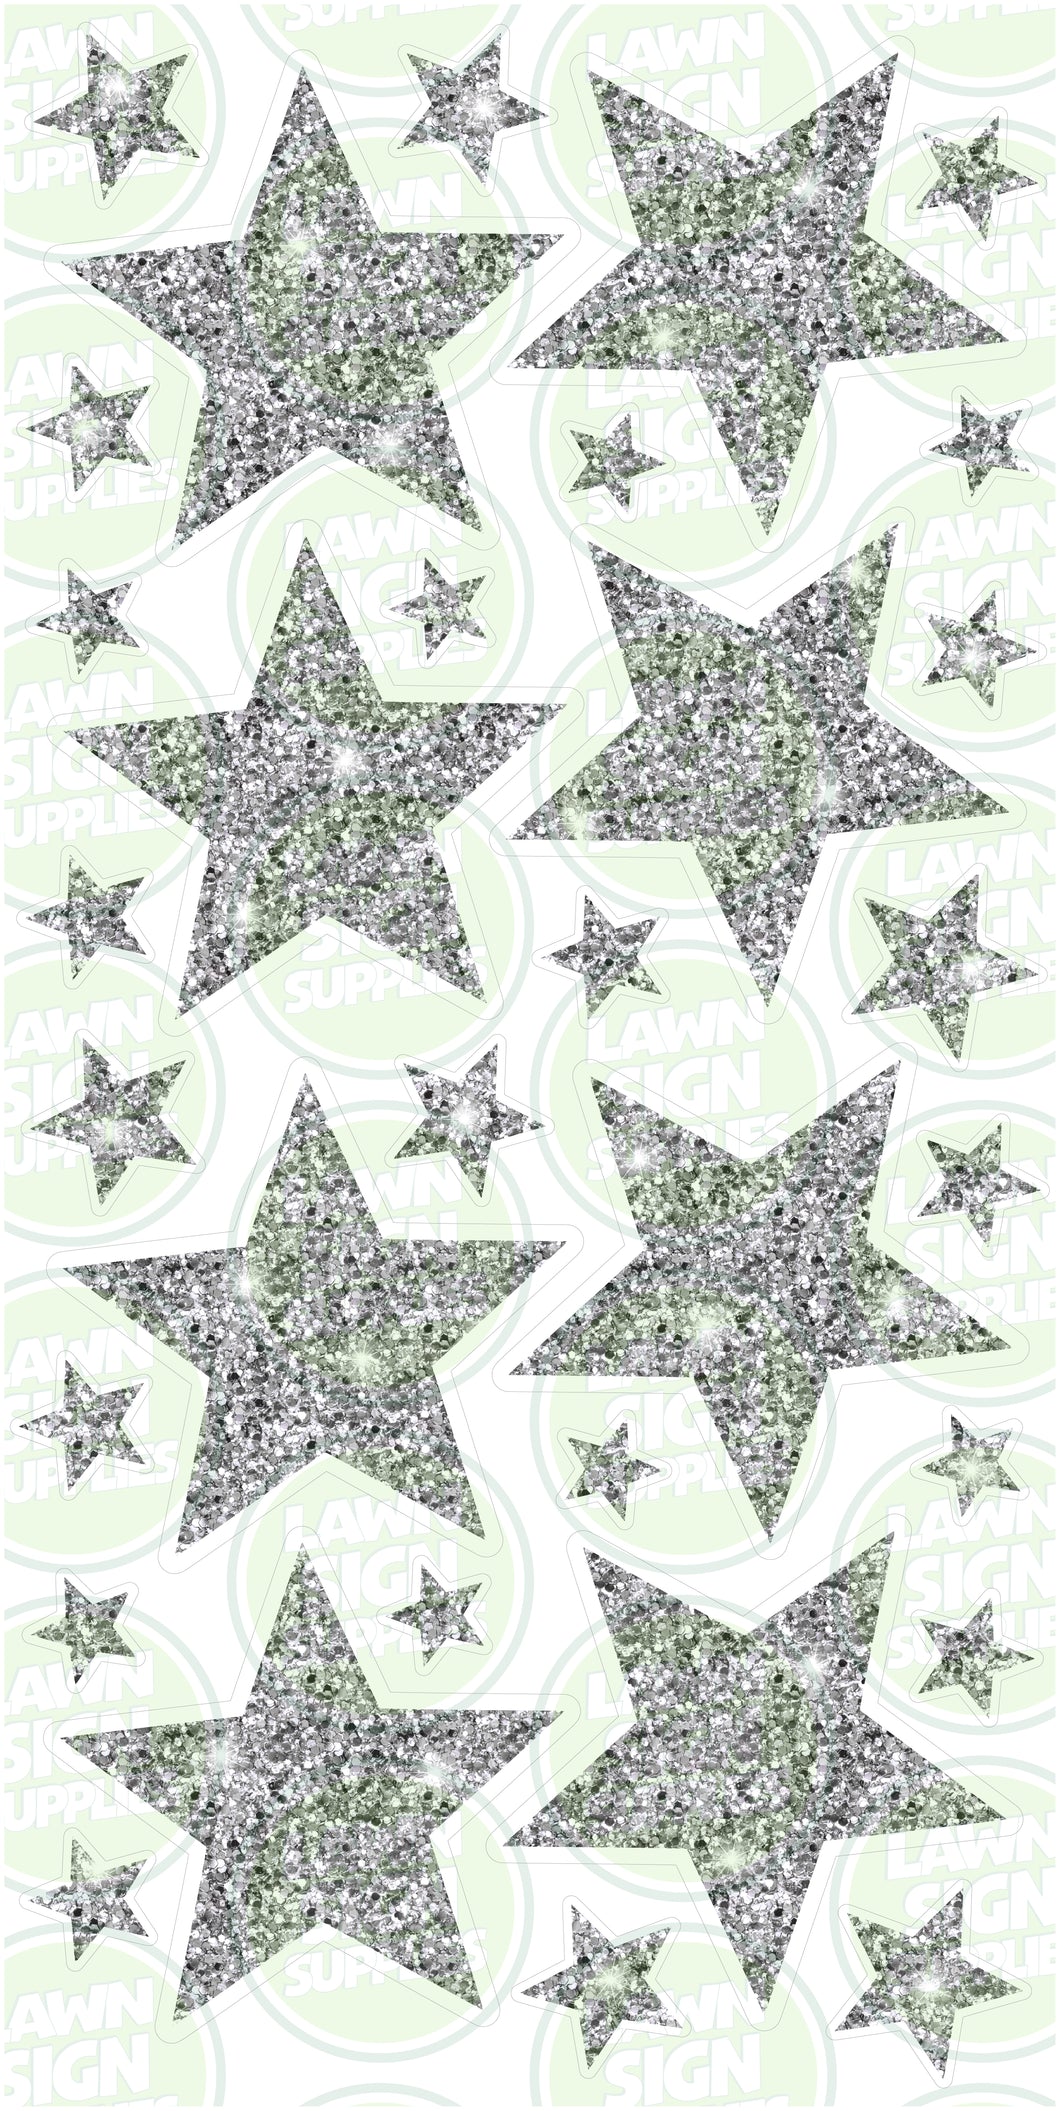 STARS - SILVER GLITTER SPARKLE